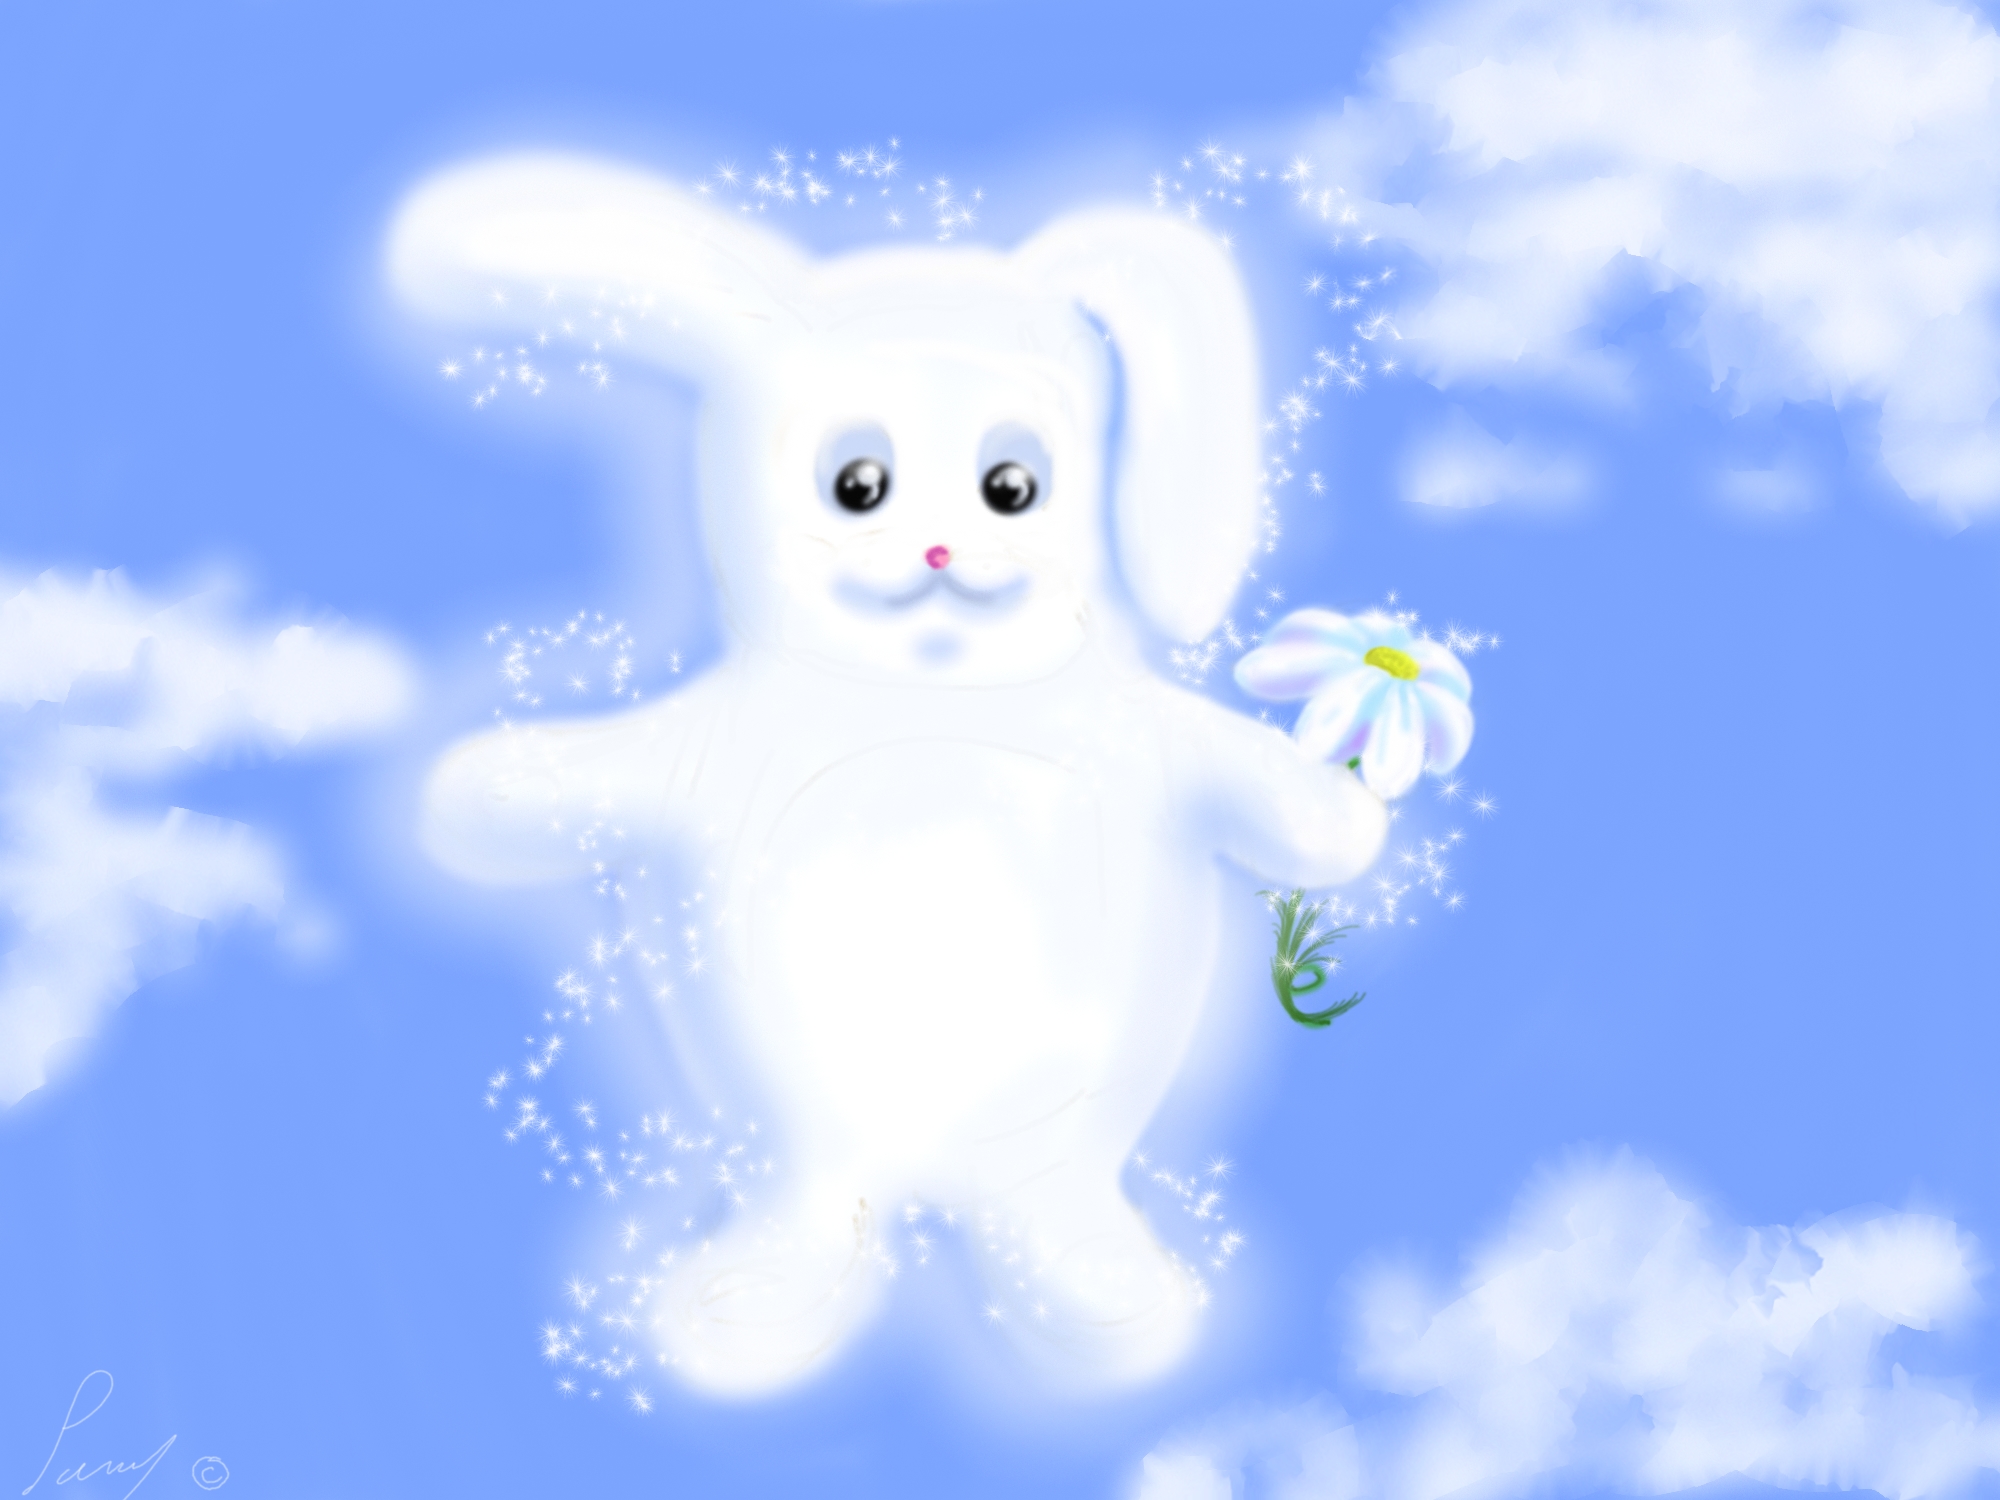 Rabbit the cloud